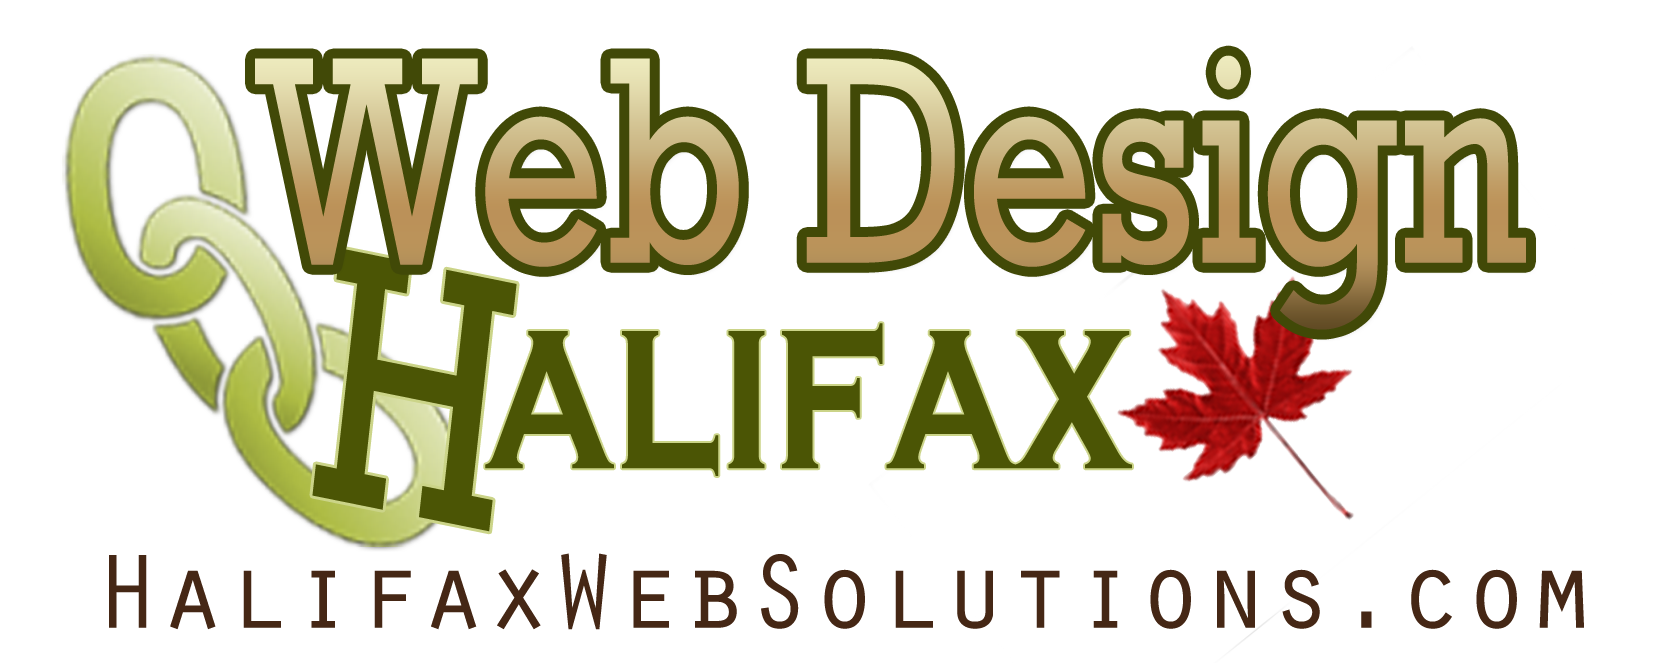 halifax web design